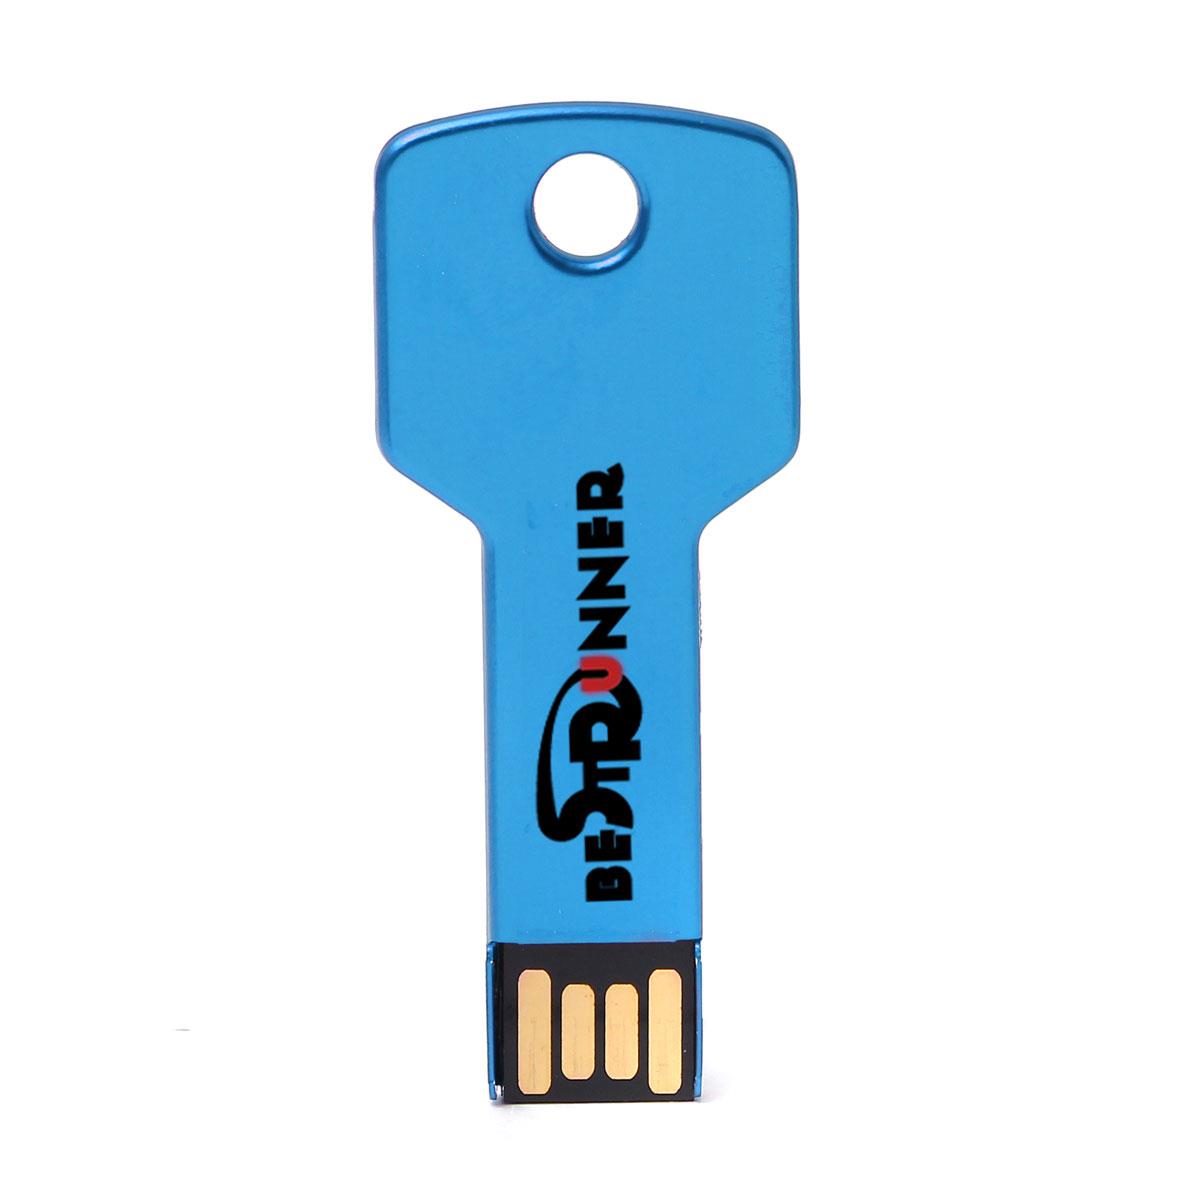 32G 32GB Metal KEY Design USB 2.0 Memory Flash Drive Thumb Pen Stick 9 Colors